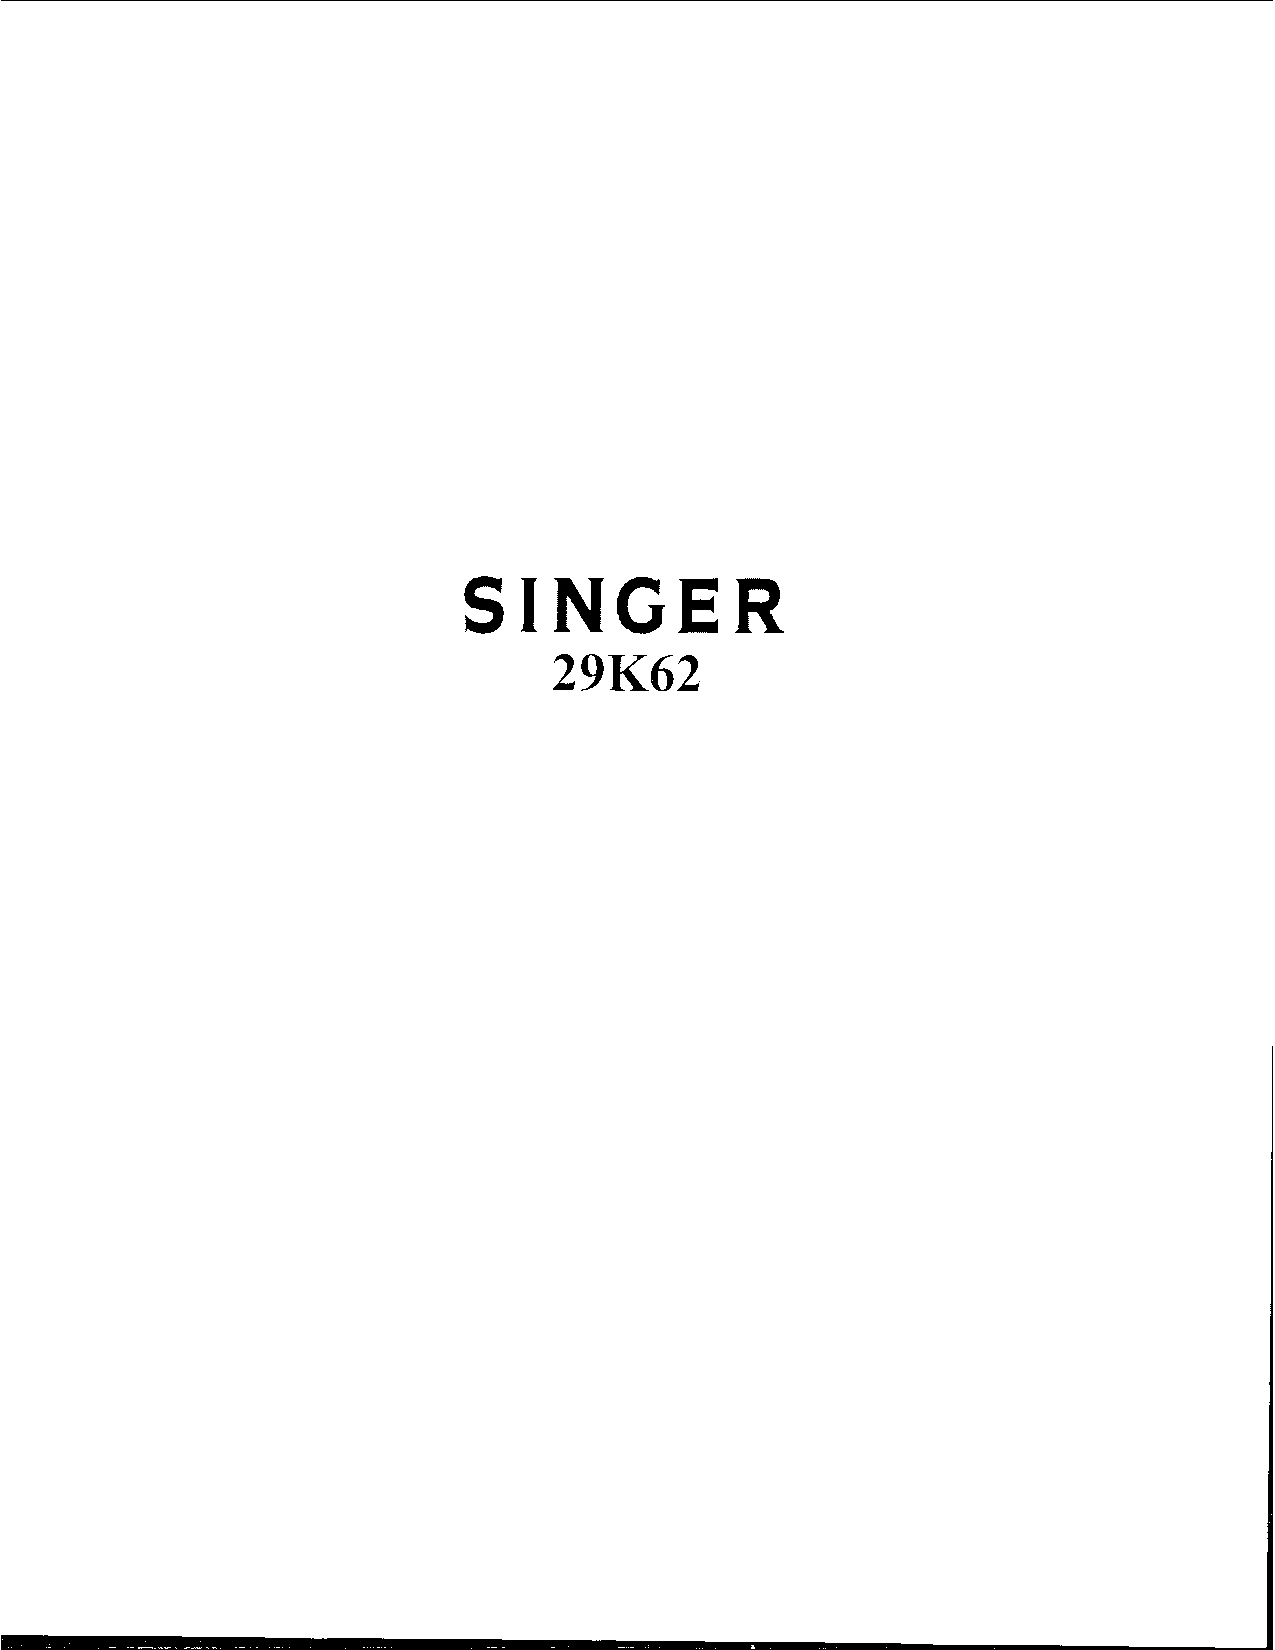 Singer 29K62 User Manual